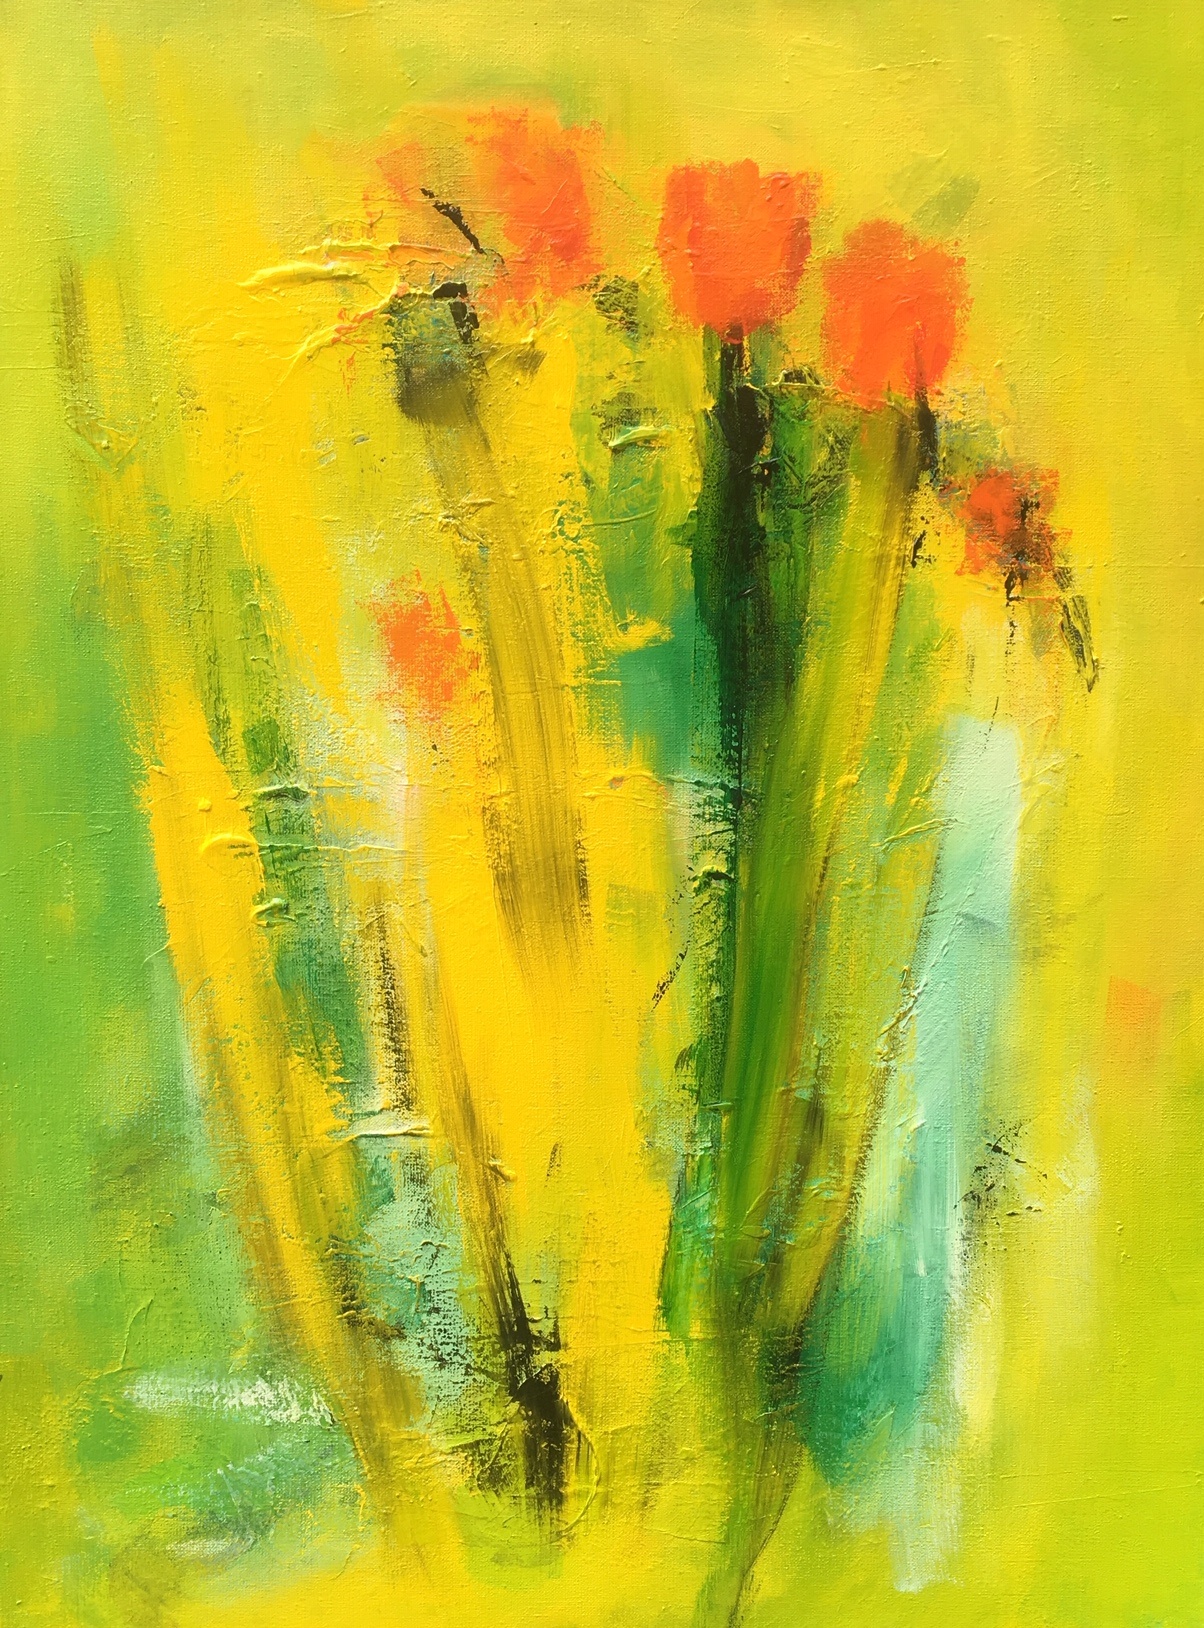 Skønne forårsfarver i dette lyse og positive maleri - som er abstrakt, men også kan ses som tulipaner i haven